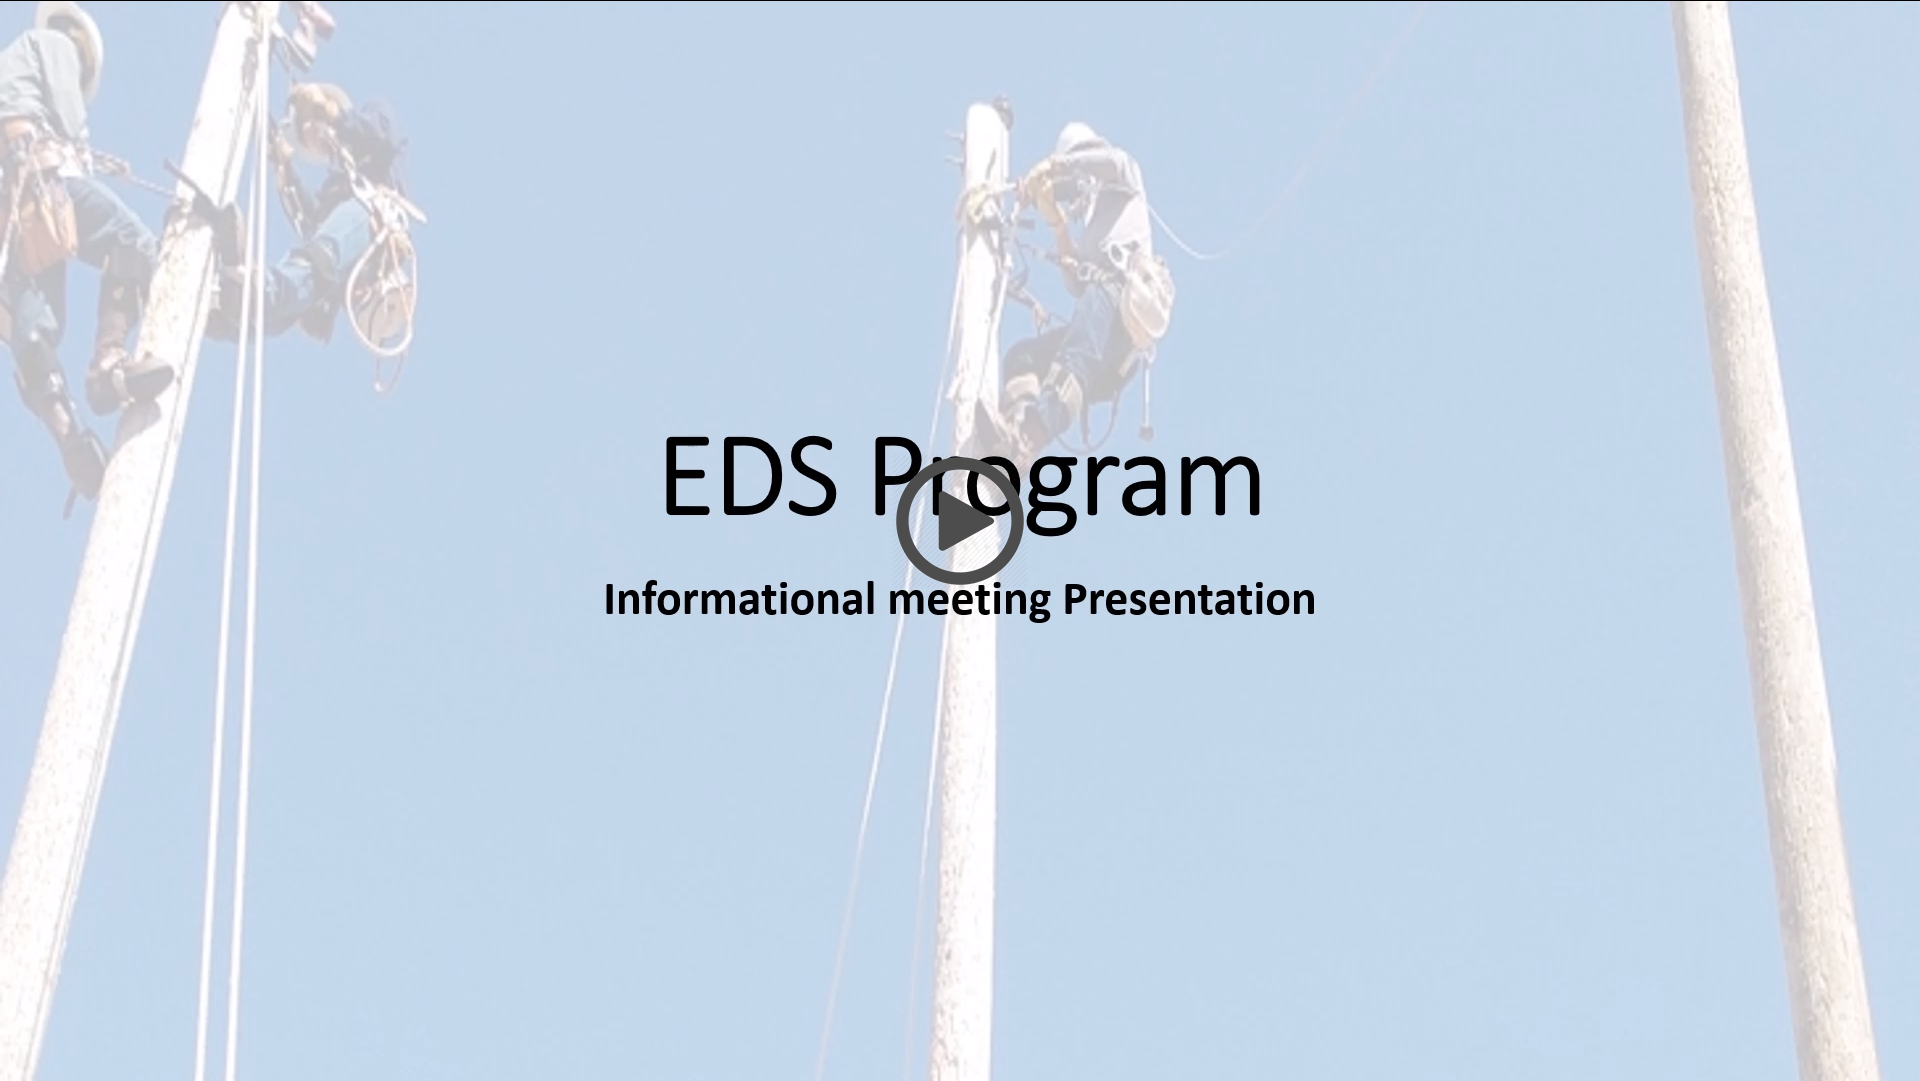 EDS Program Video Poster